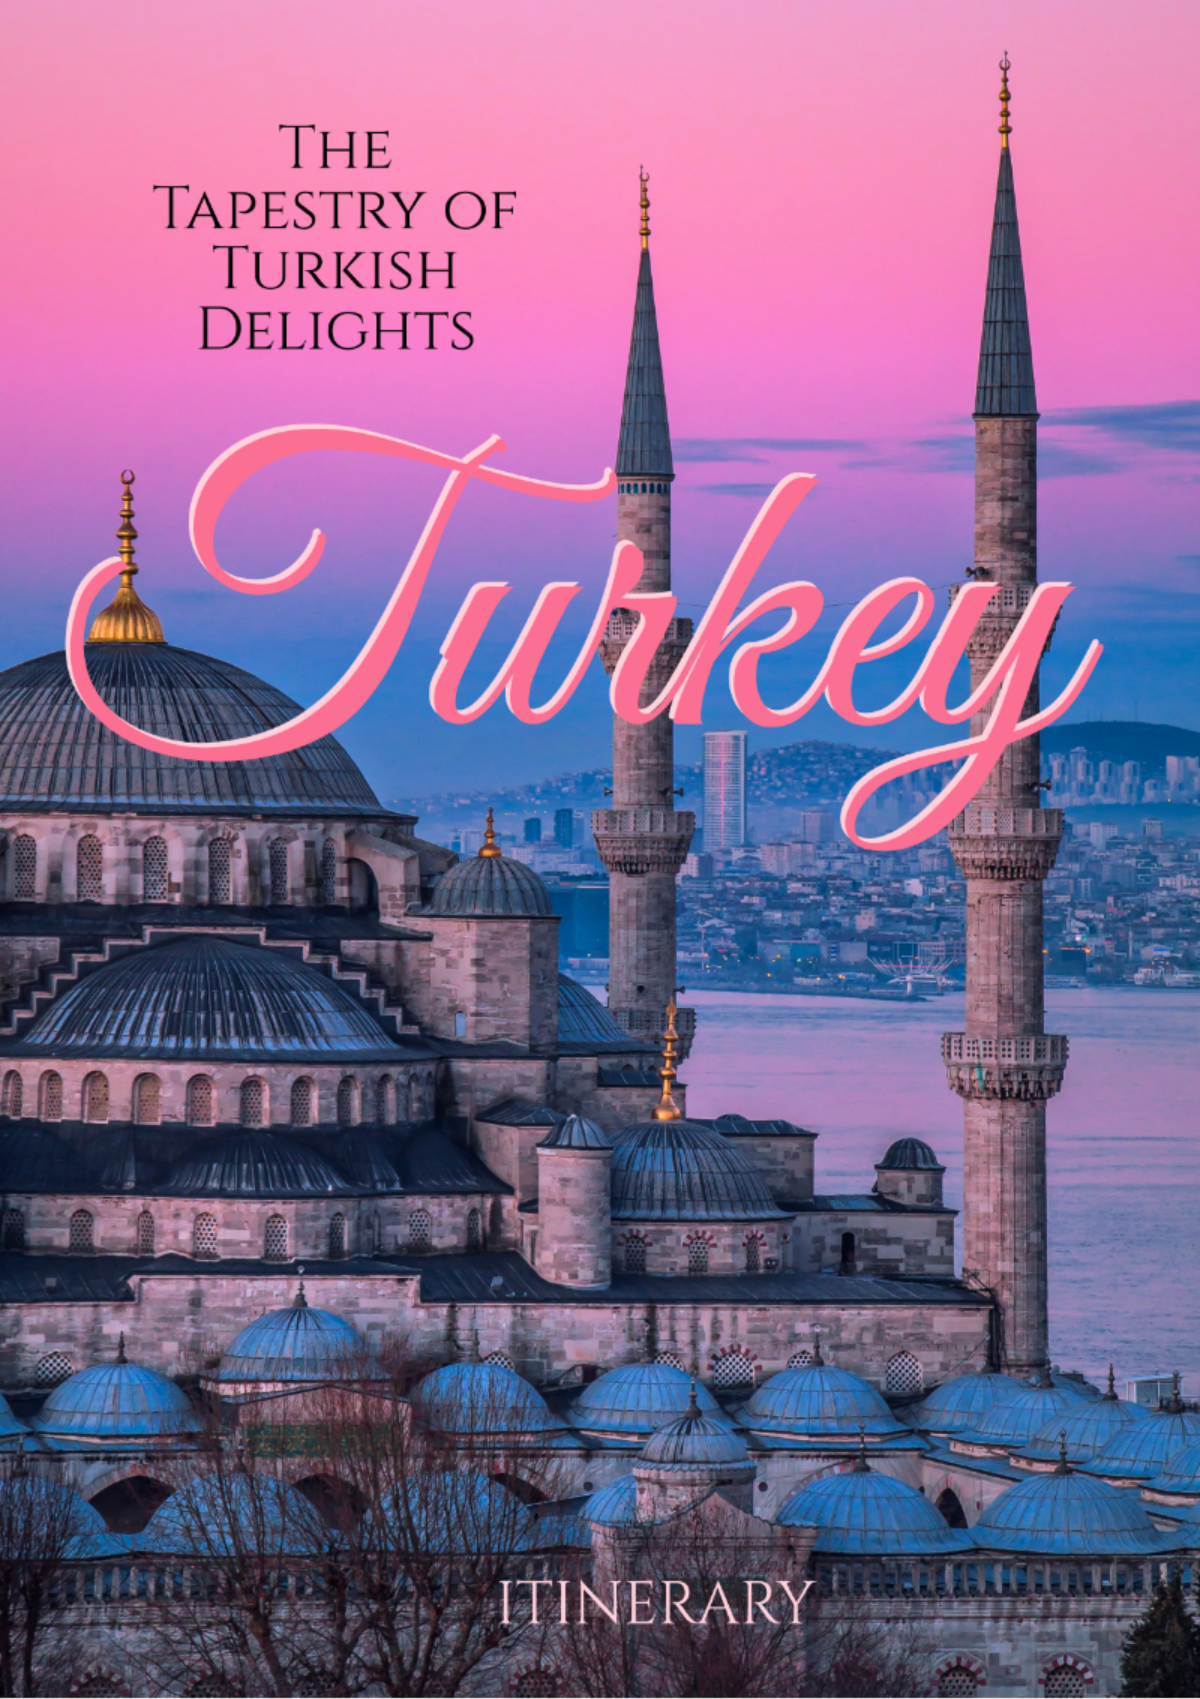 6 Day Turkey Itinerary Template